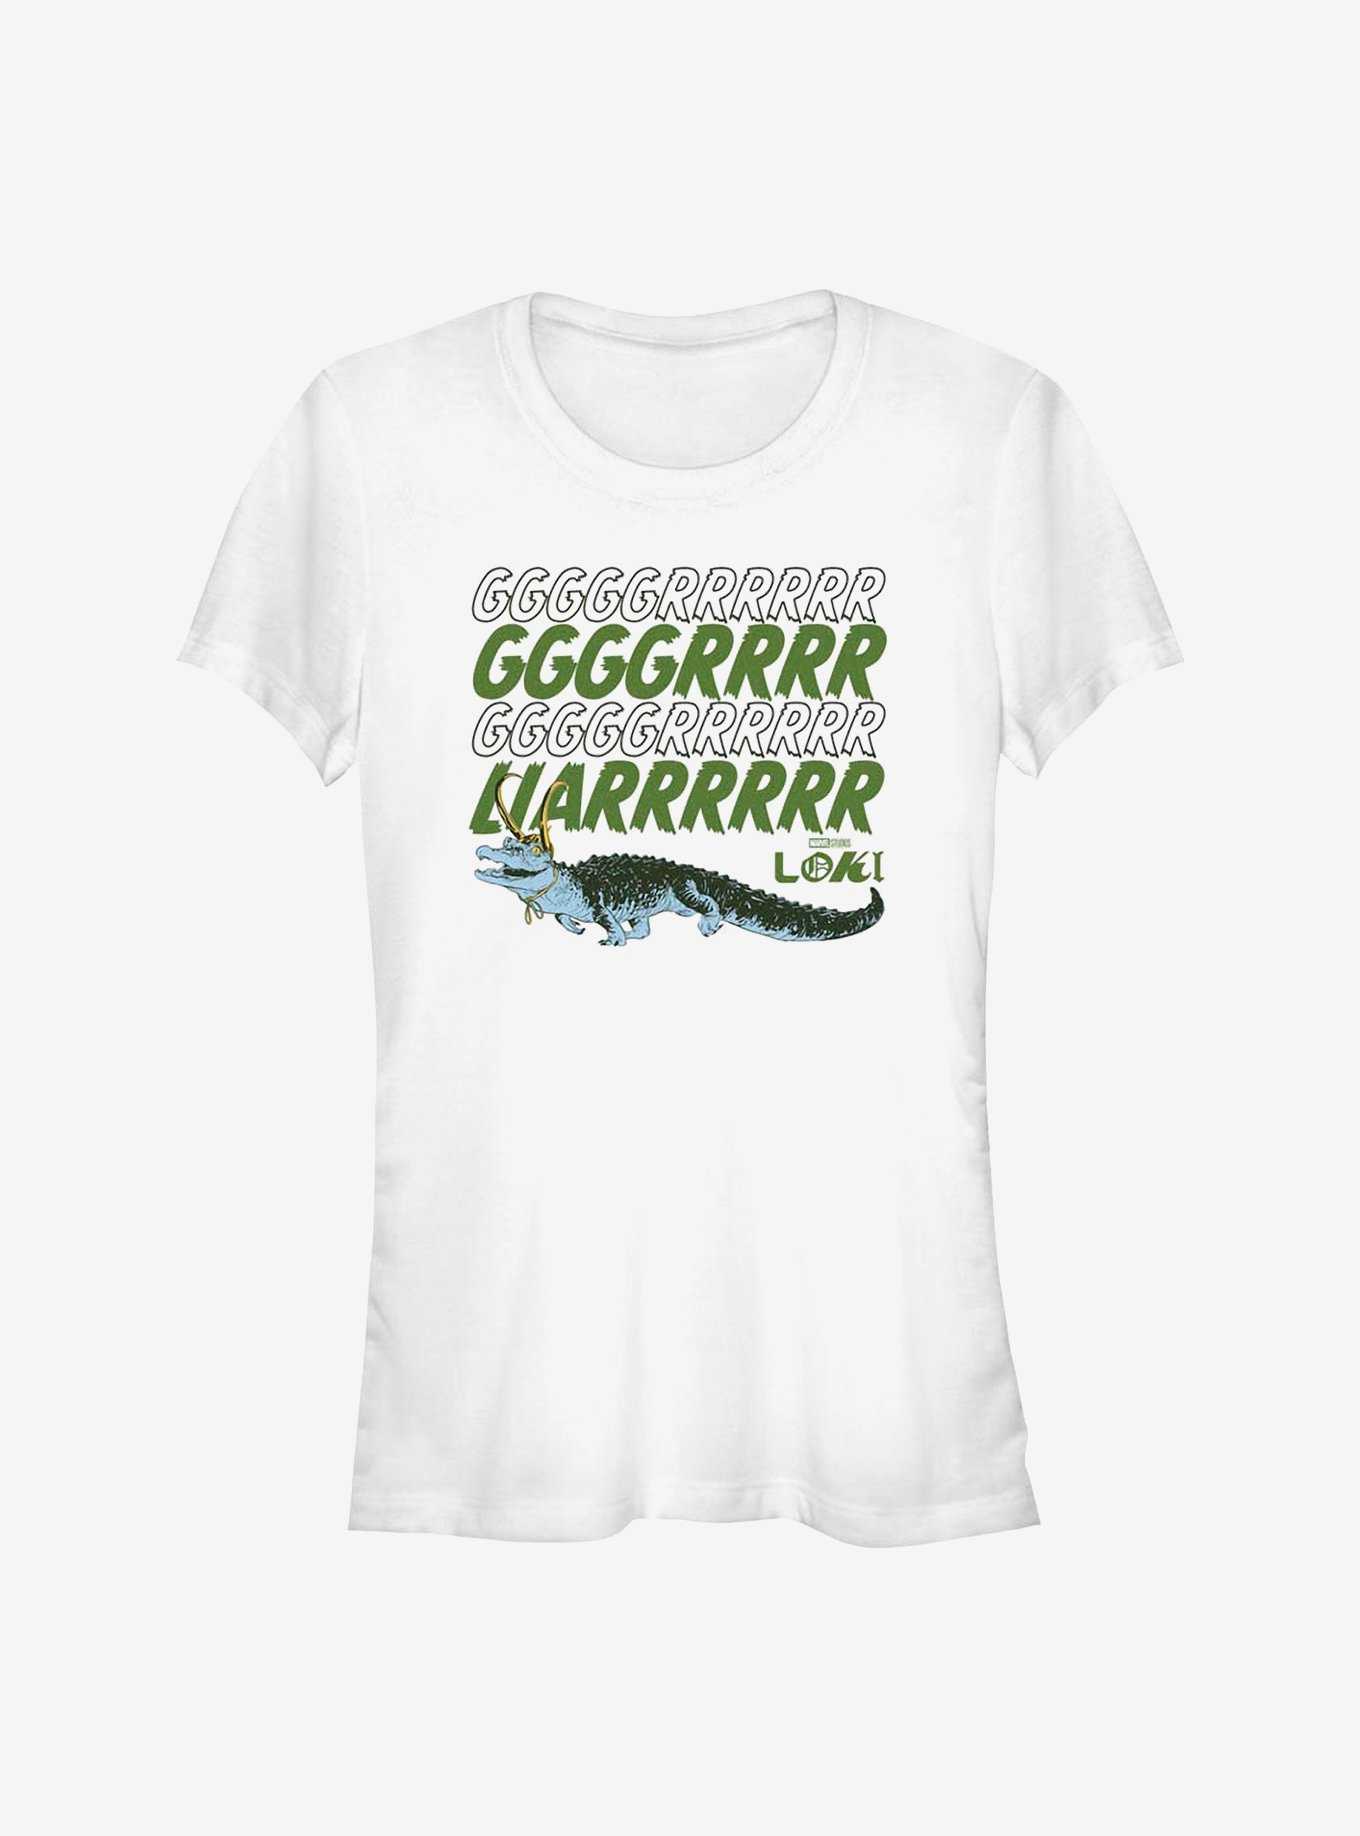 Marvel Loki Grrr Liar Alligator Girls T-Shirt, , hi-res